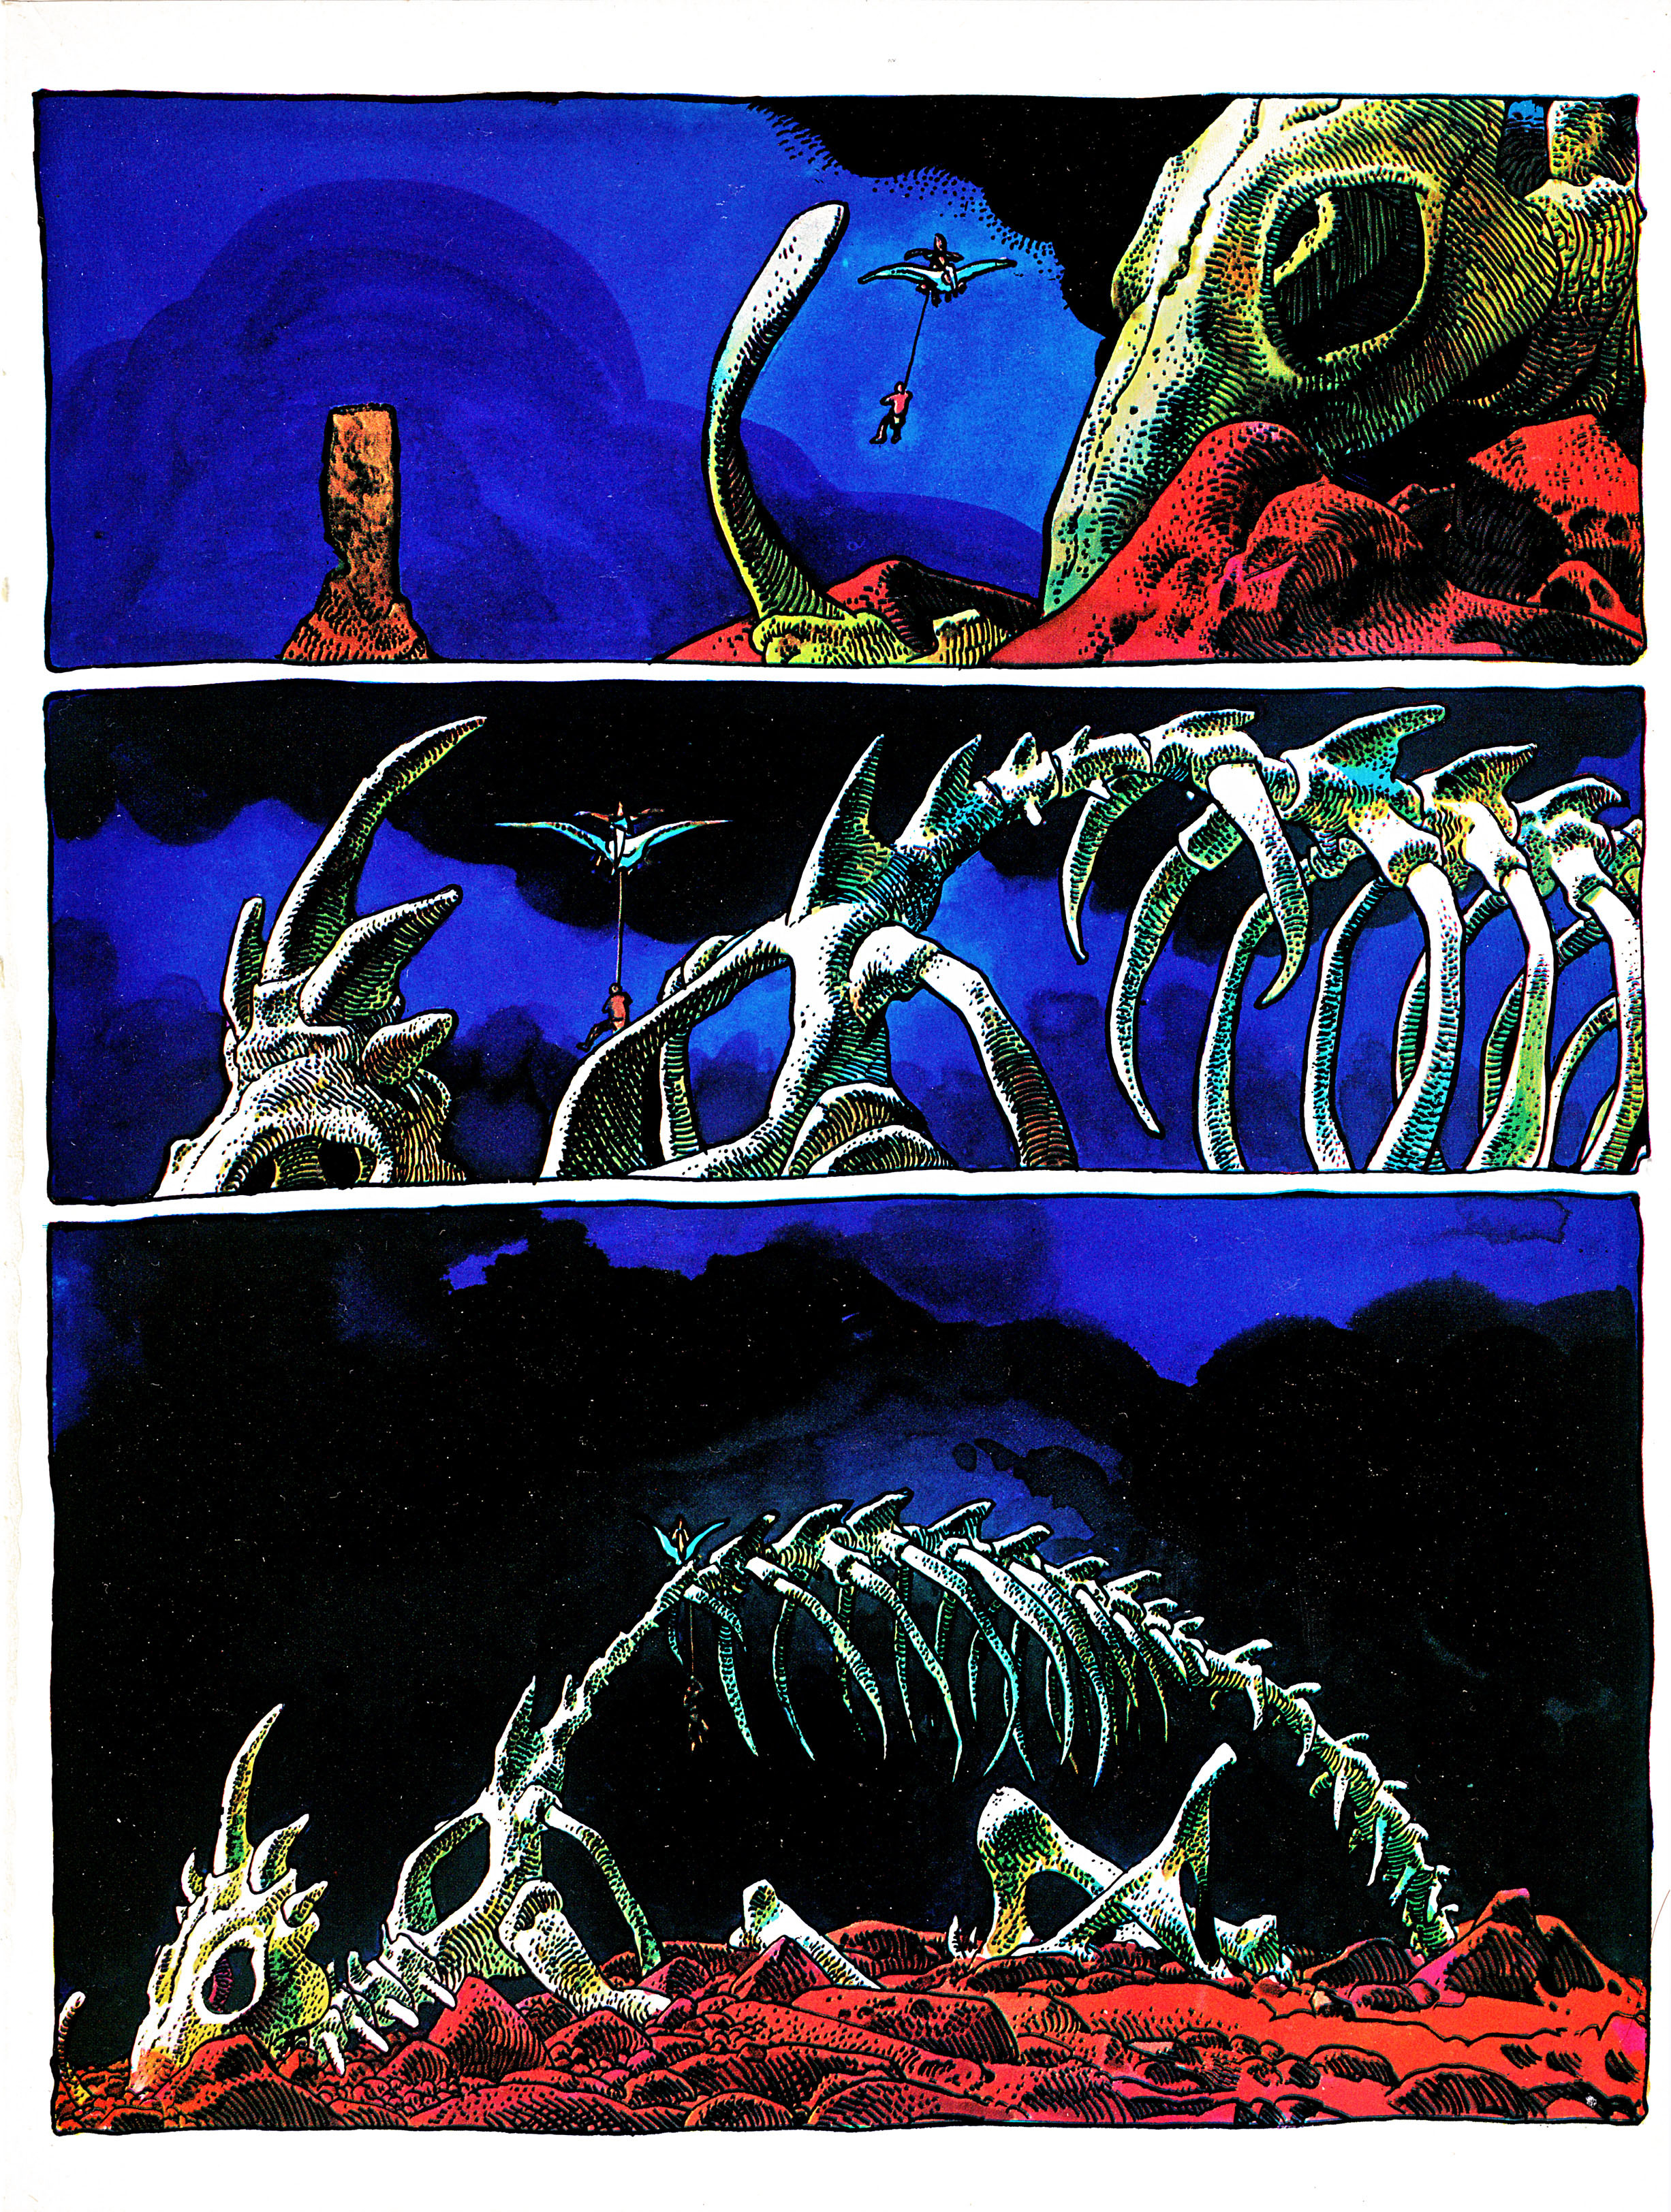 Read online Epic Graphic Novel: Moebius comic -  Issue # TPB 2 - 10